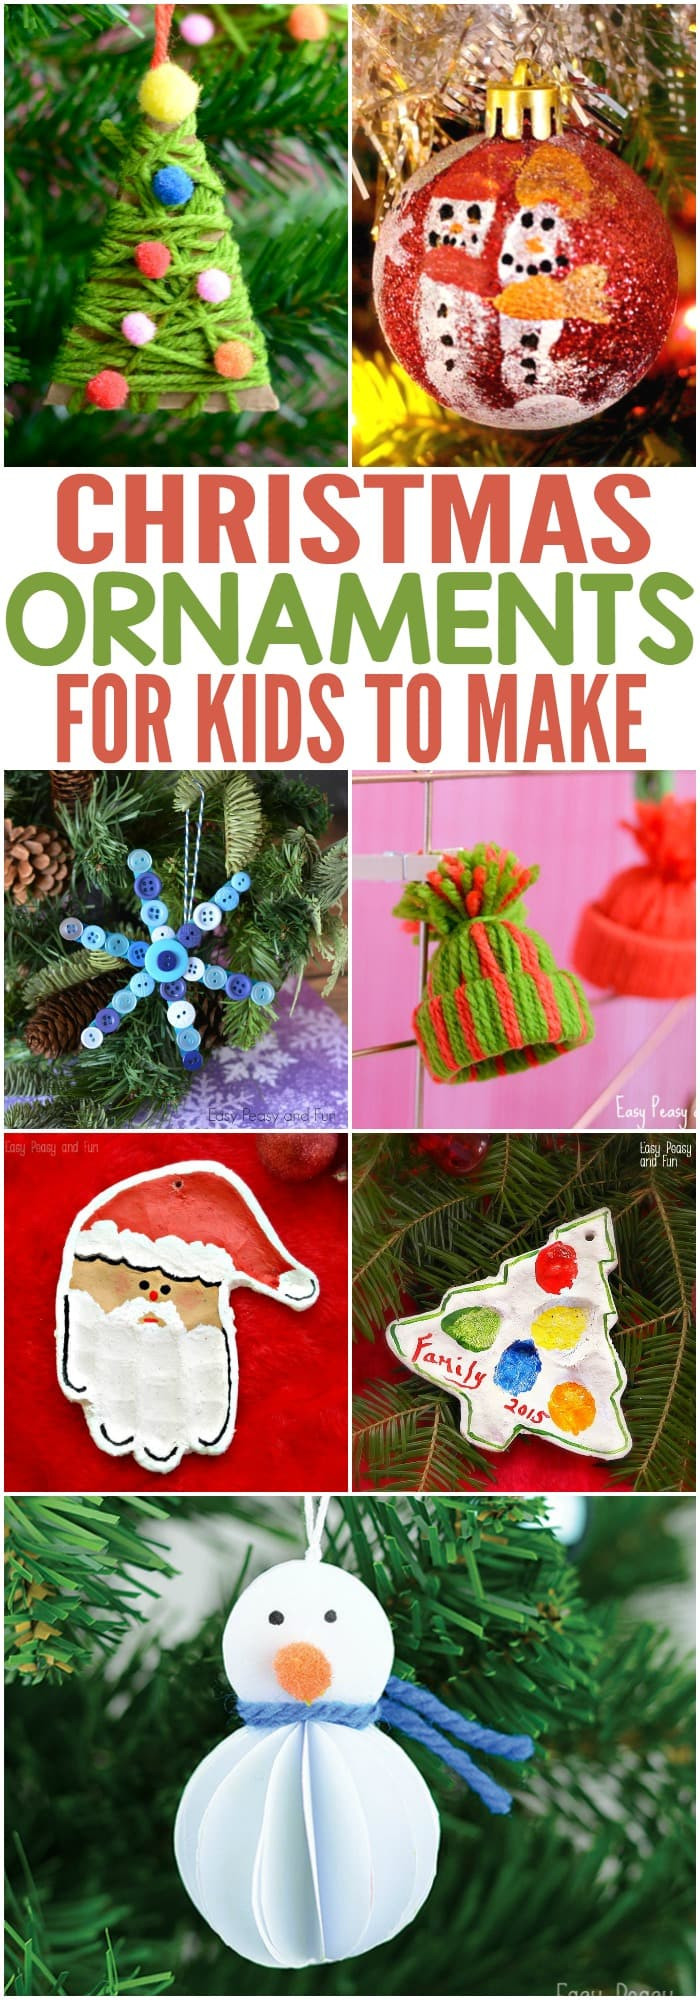 Best ideas about Kids DIY Christmas Ornaments
. Save or Pin Jolly DIY Christmas Ornaments Ideas Homemade Memories Now.